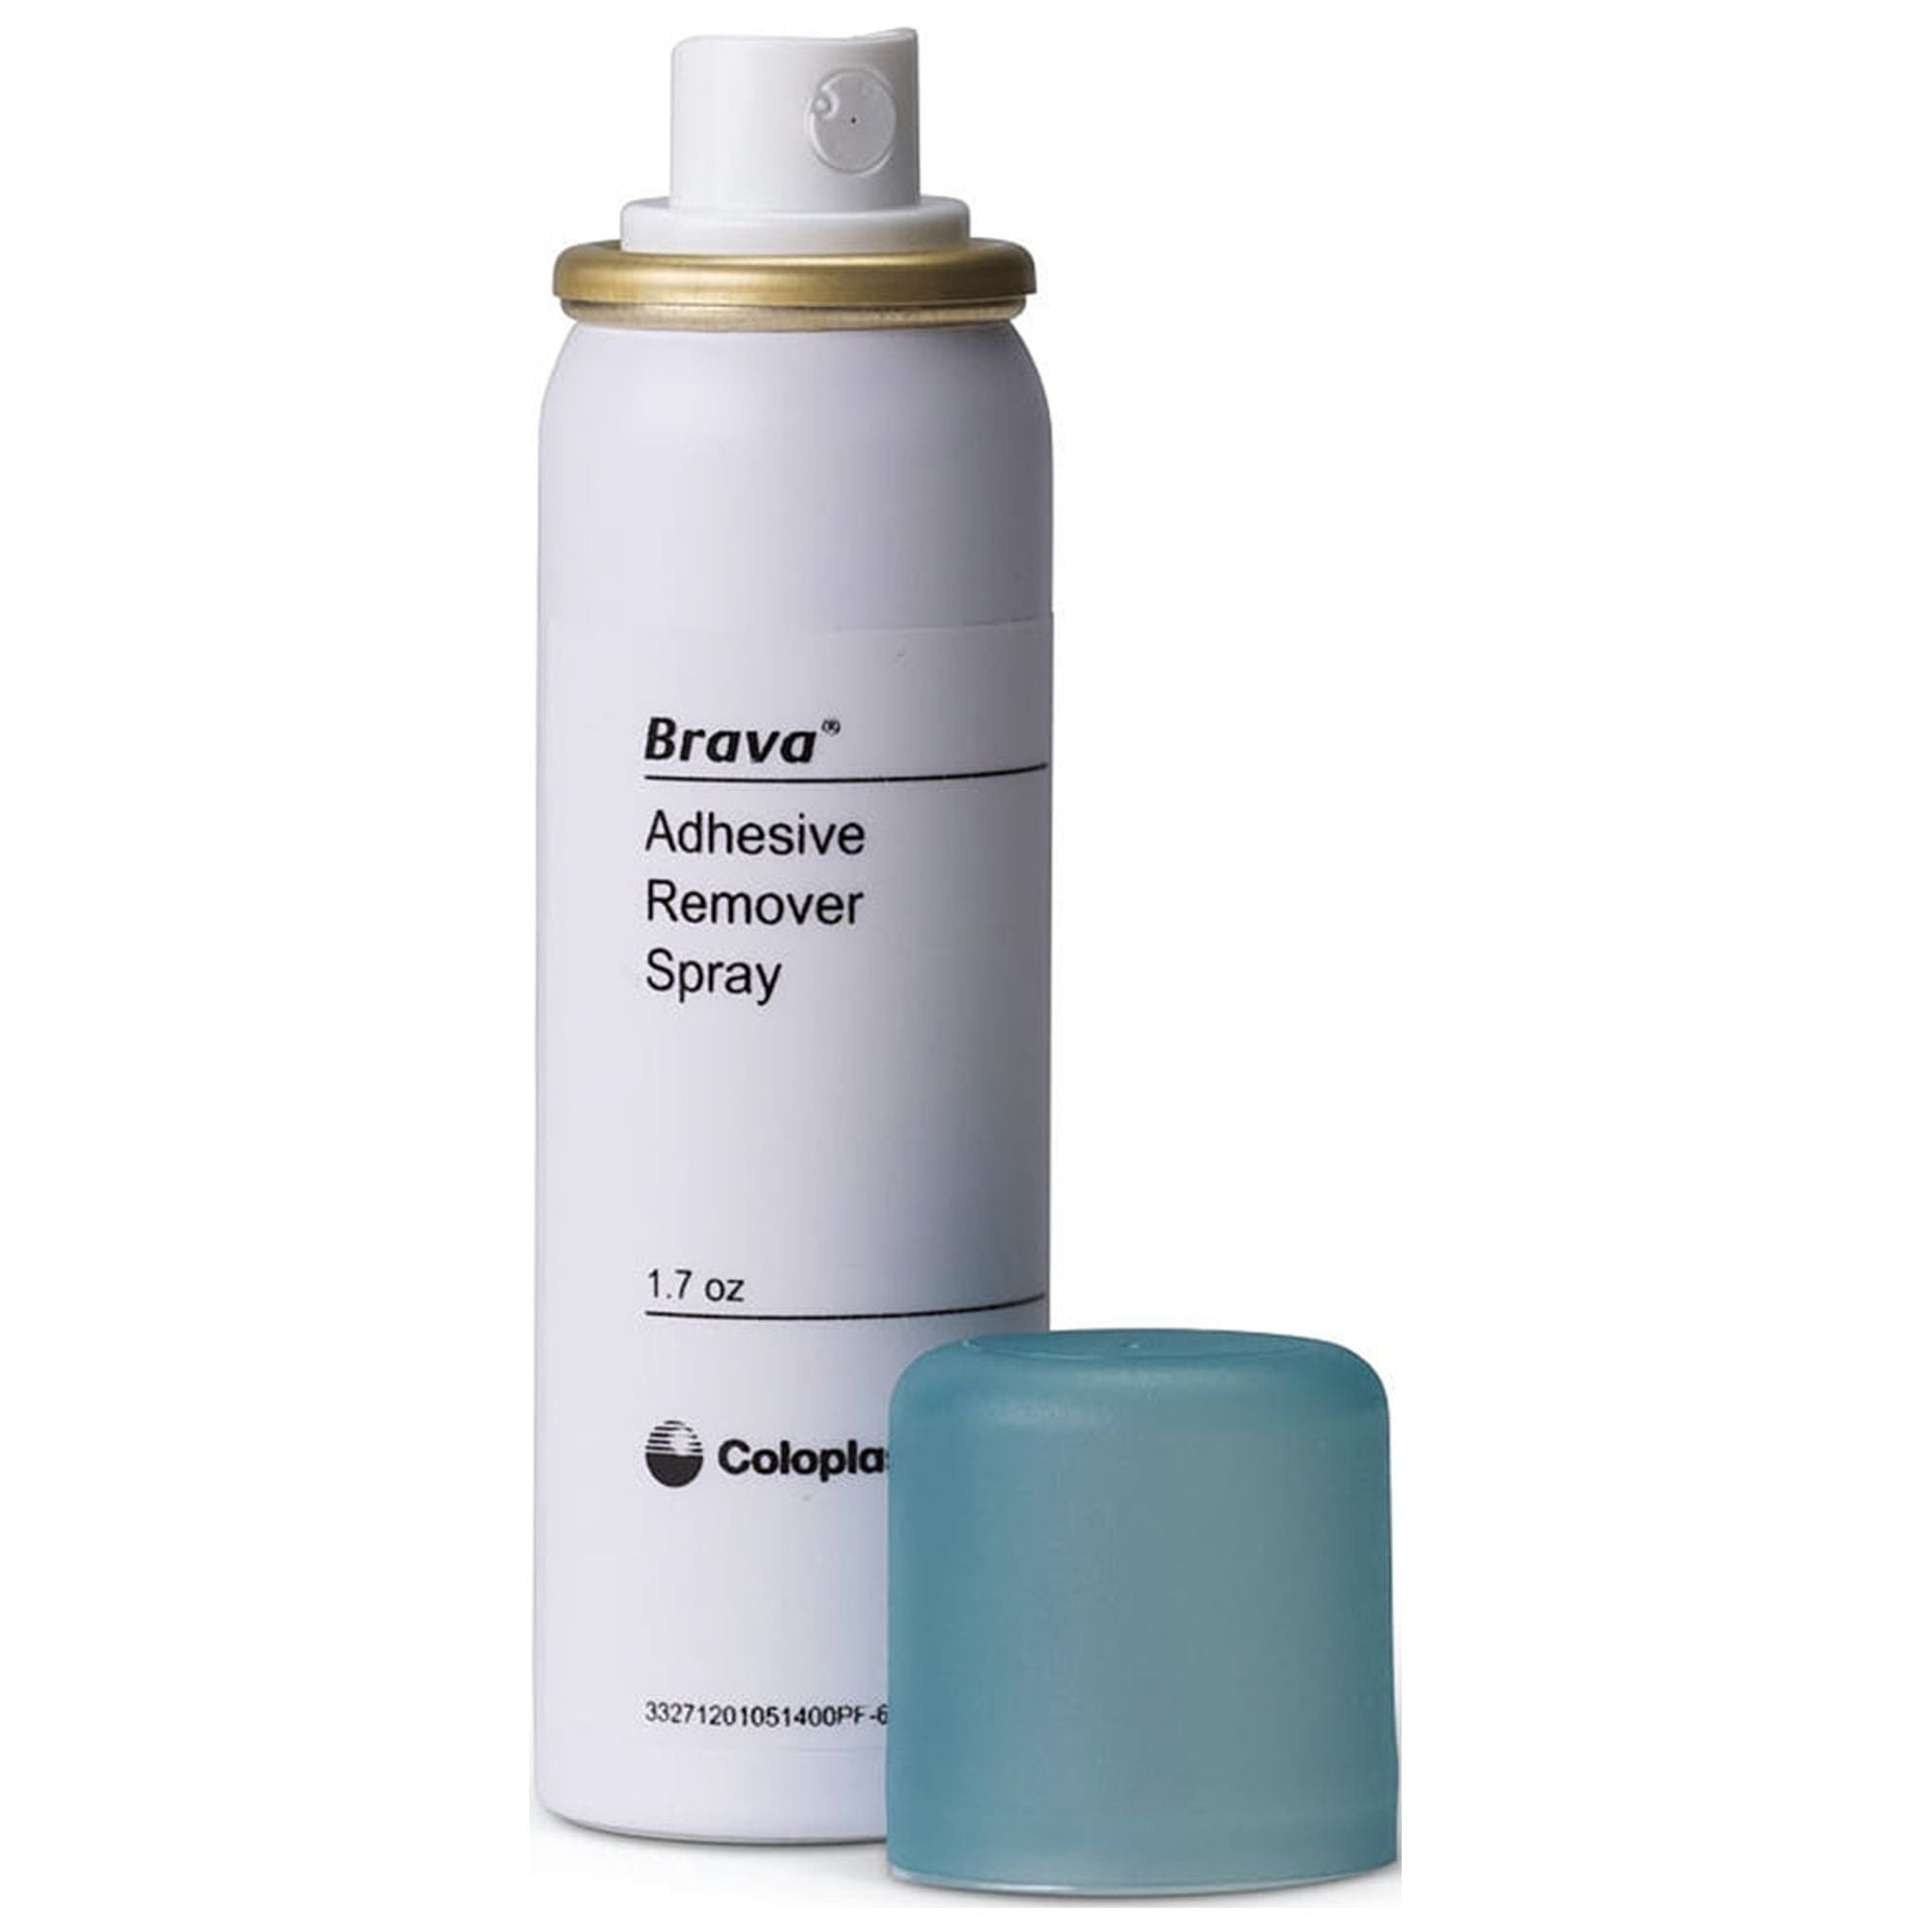 NIB Coloplast Brava Adhesive Remover Spray – 1.7 oz (120105) – Exp